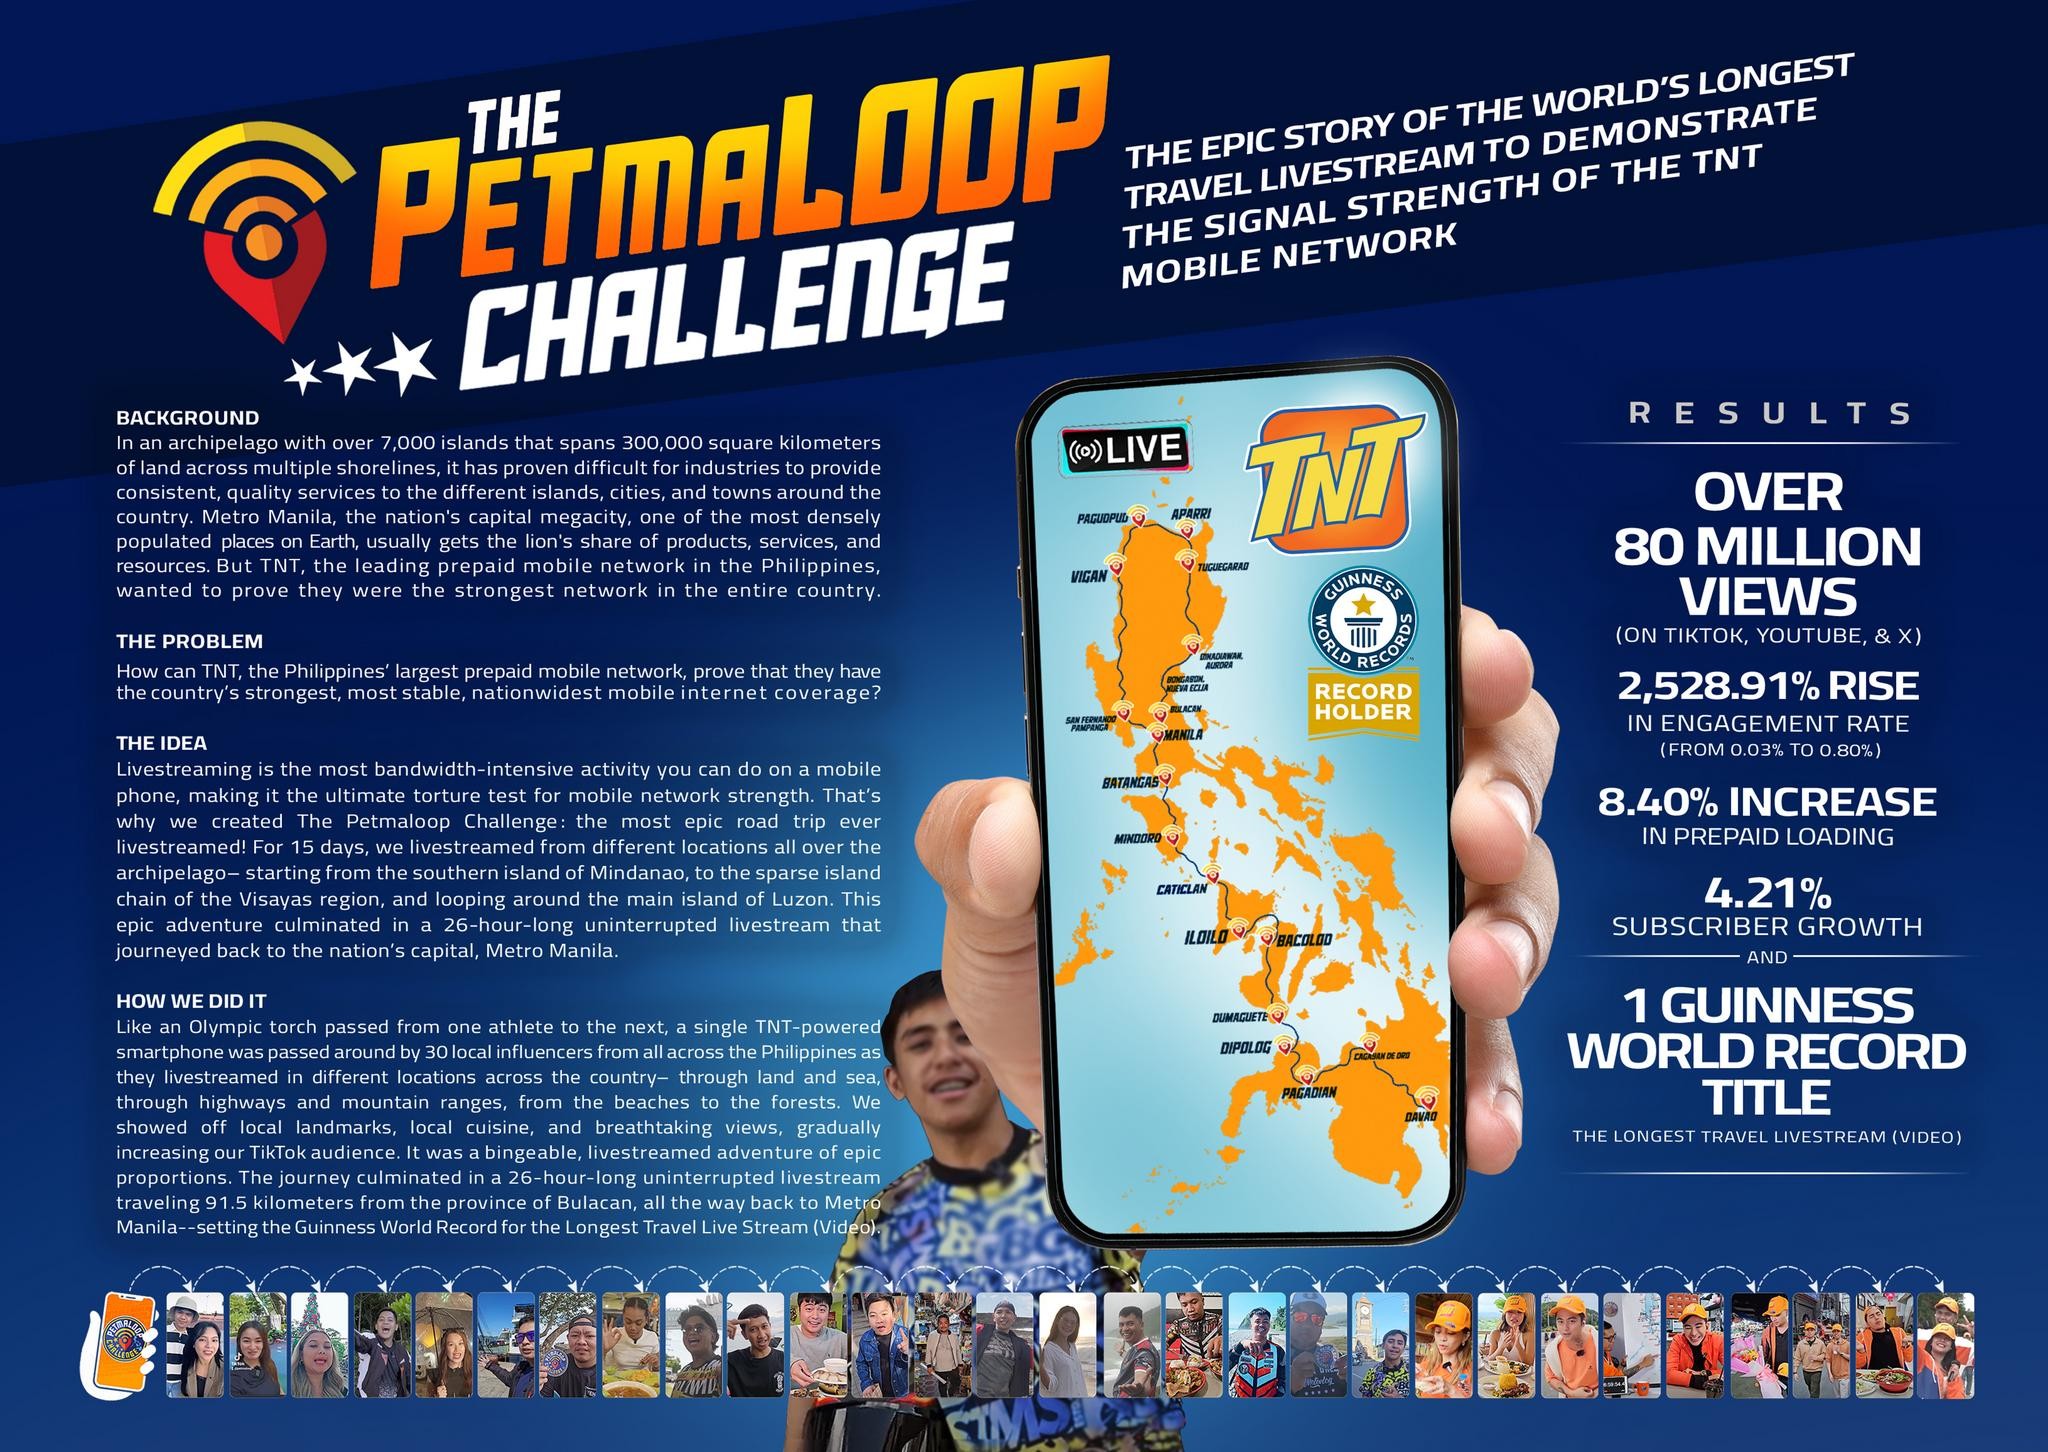 Petmaloop Challenge. The world's longest travel livestream.